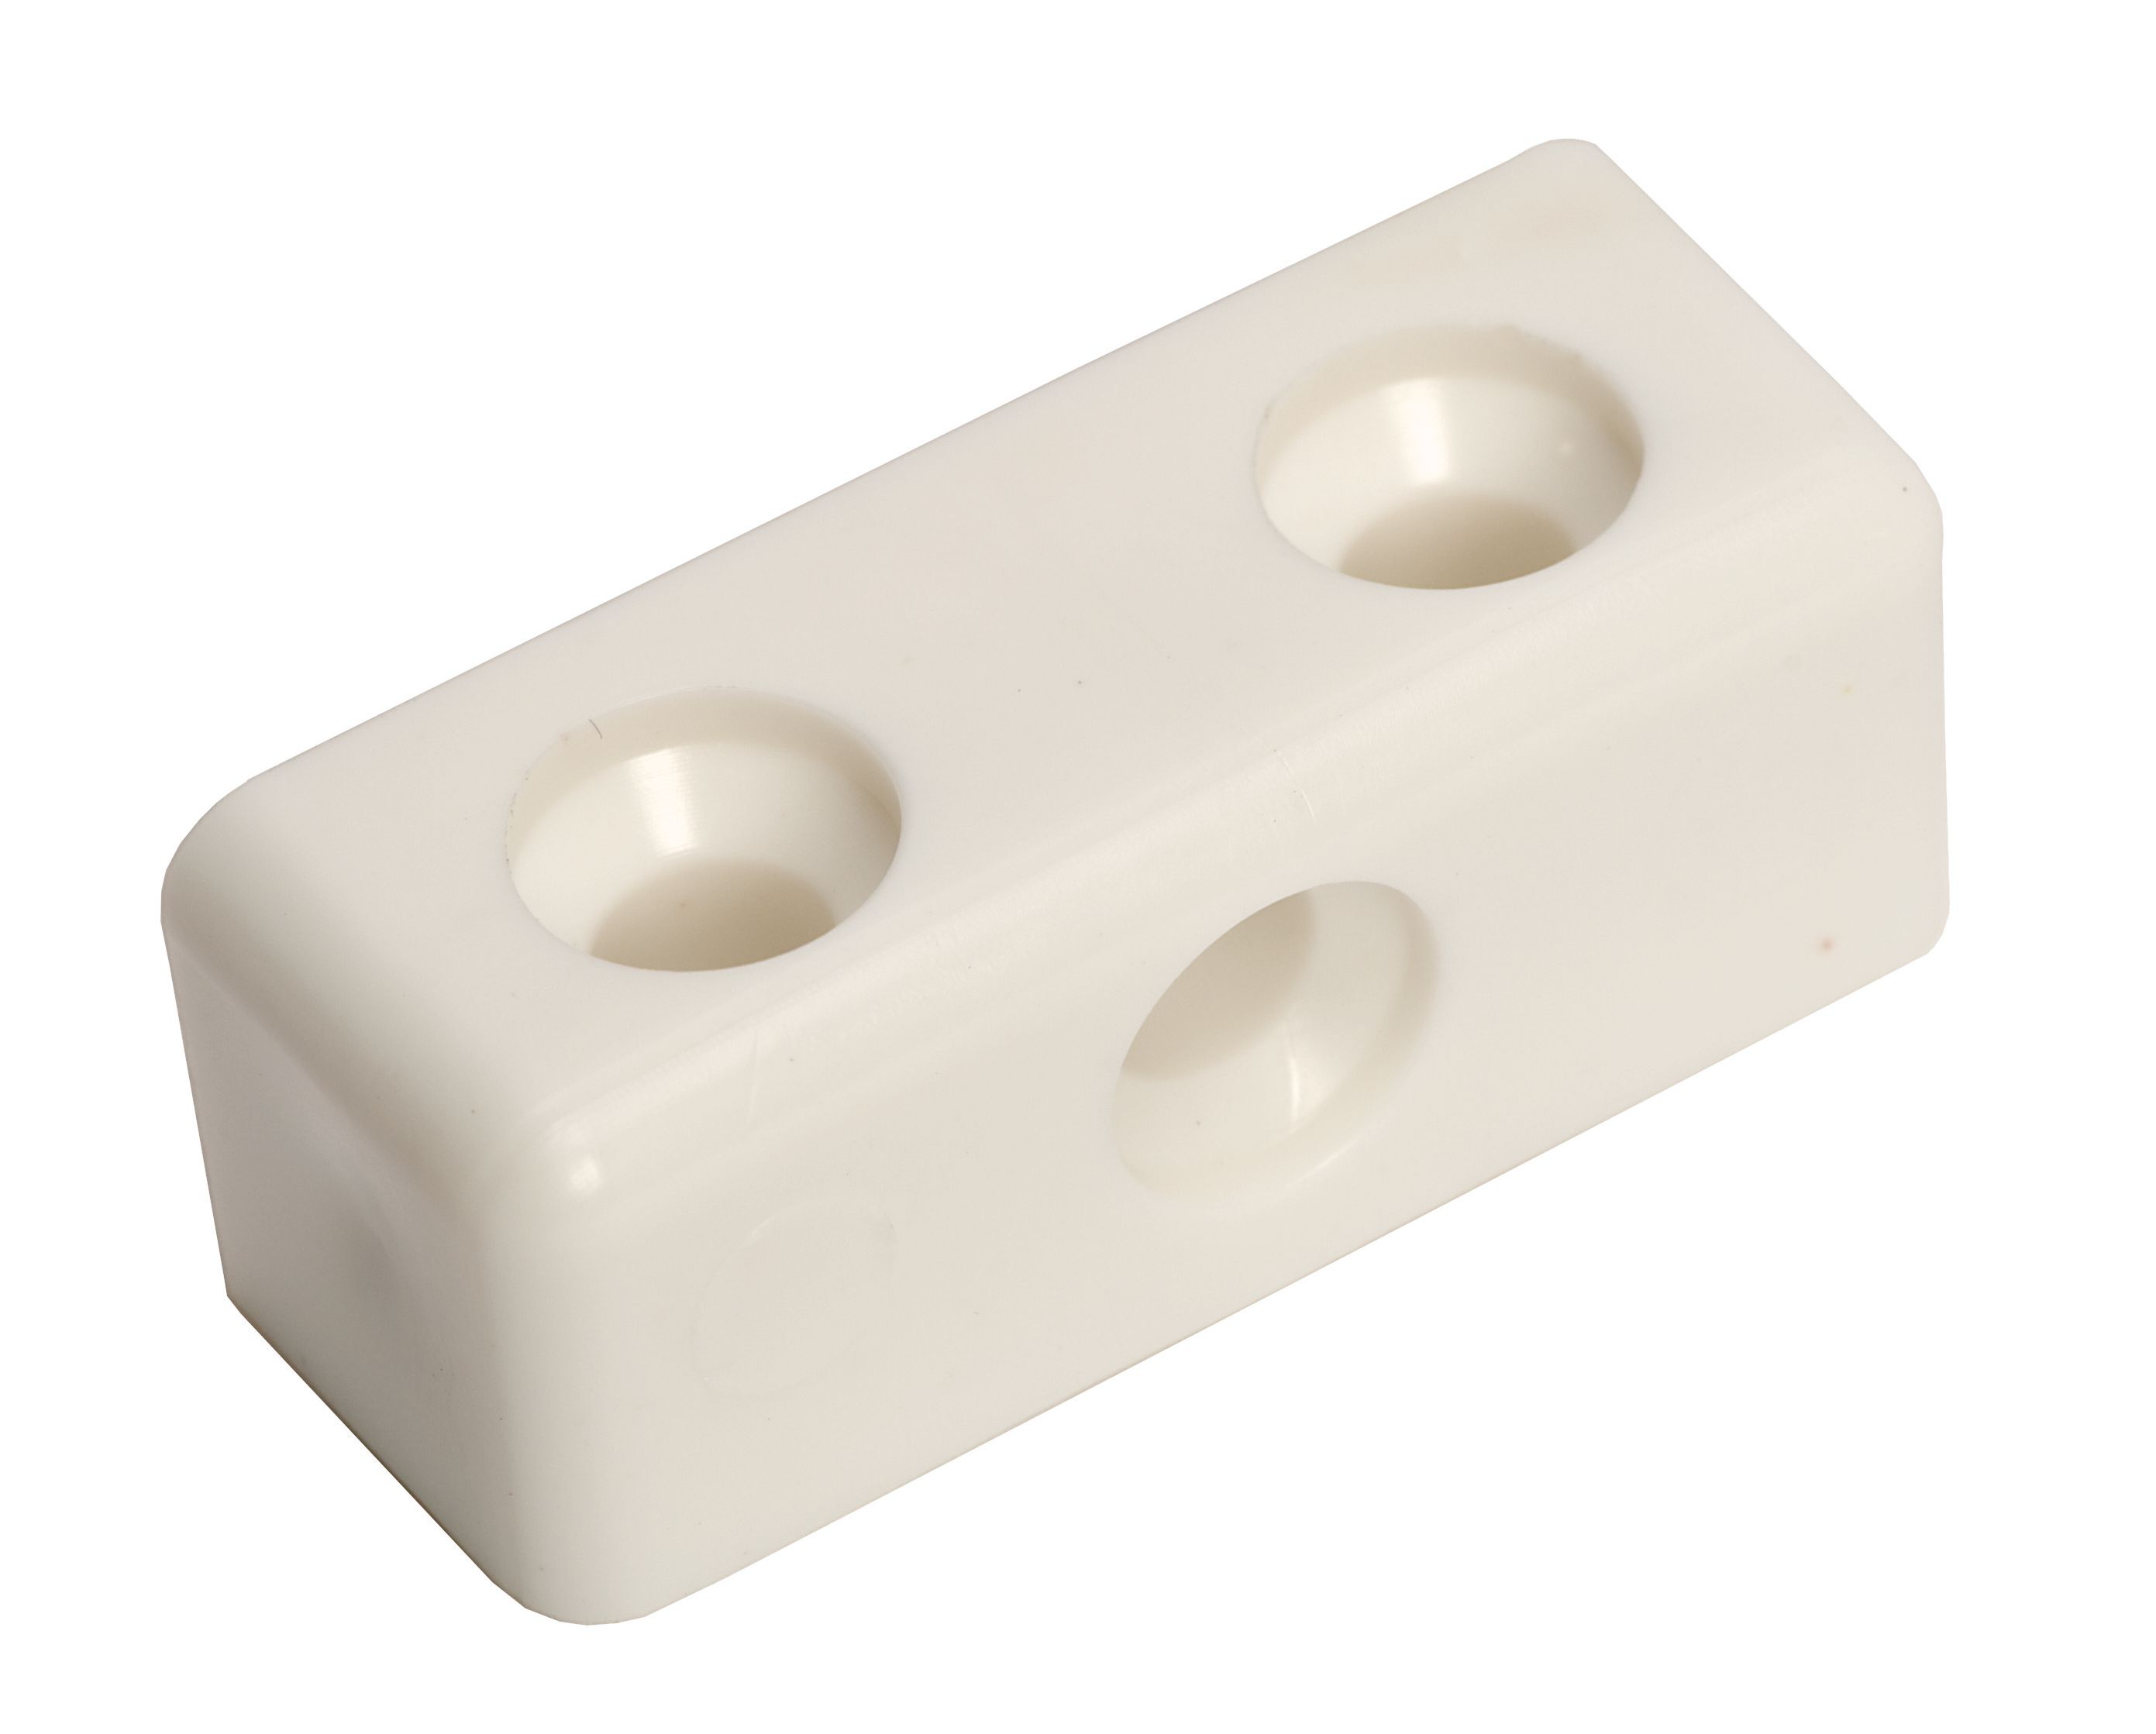 Wickes Plastic Fixit Block - White Pack of 100